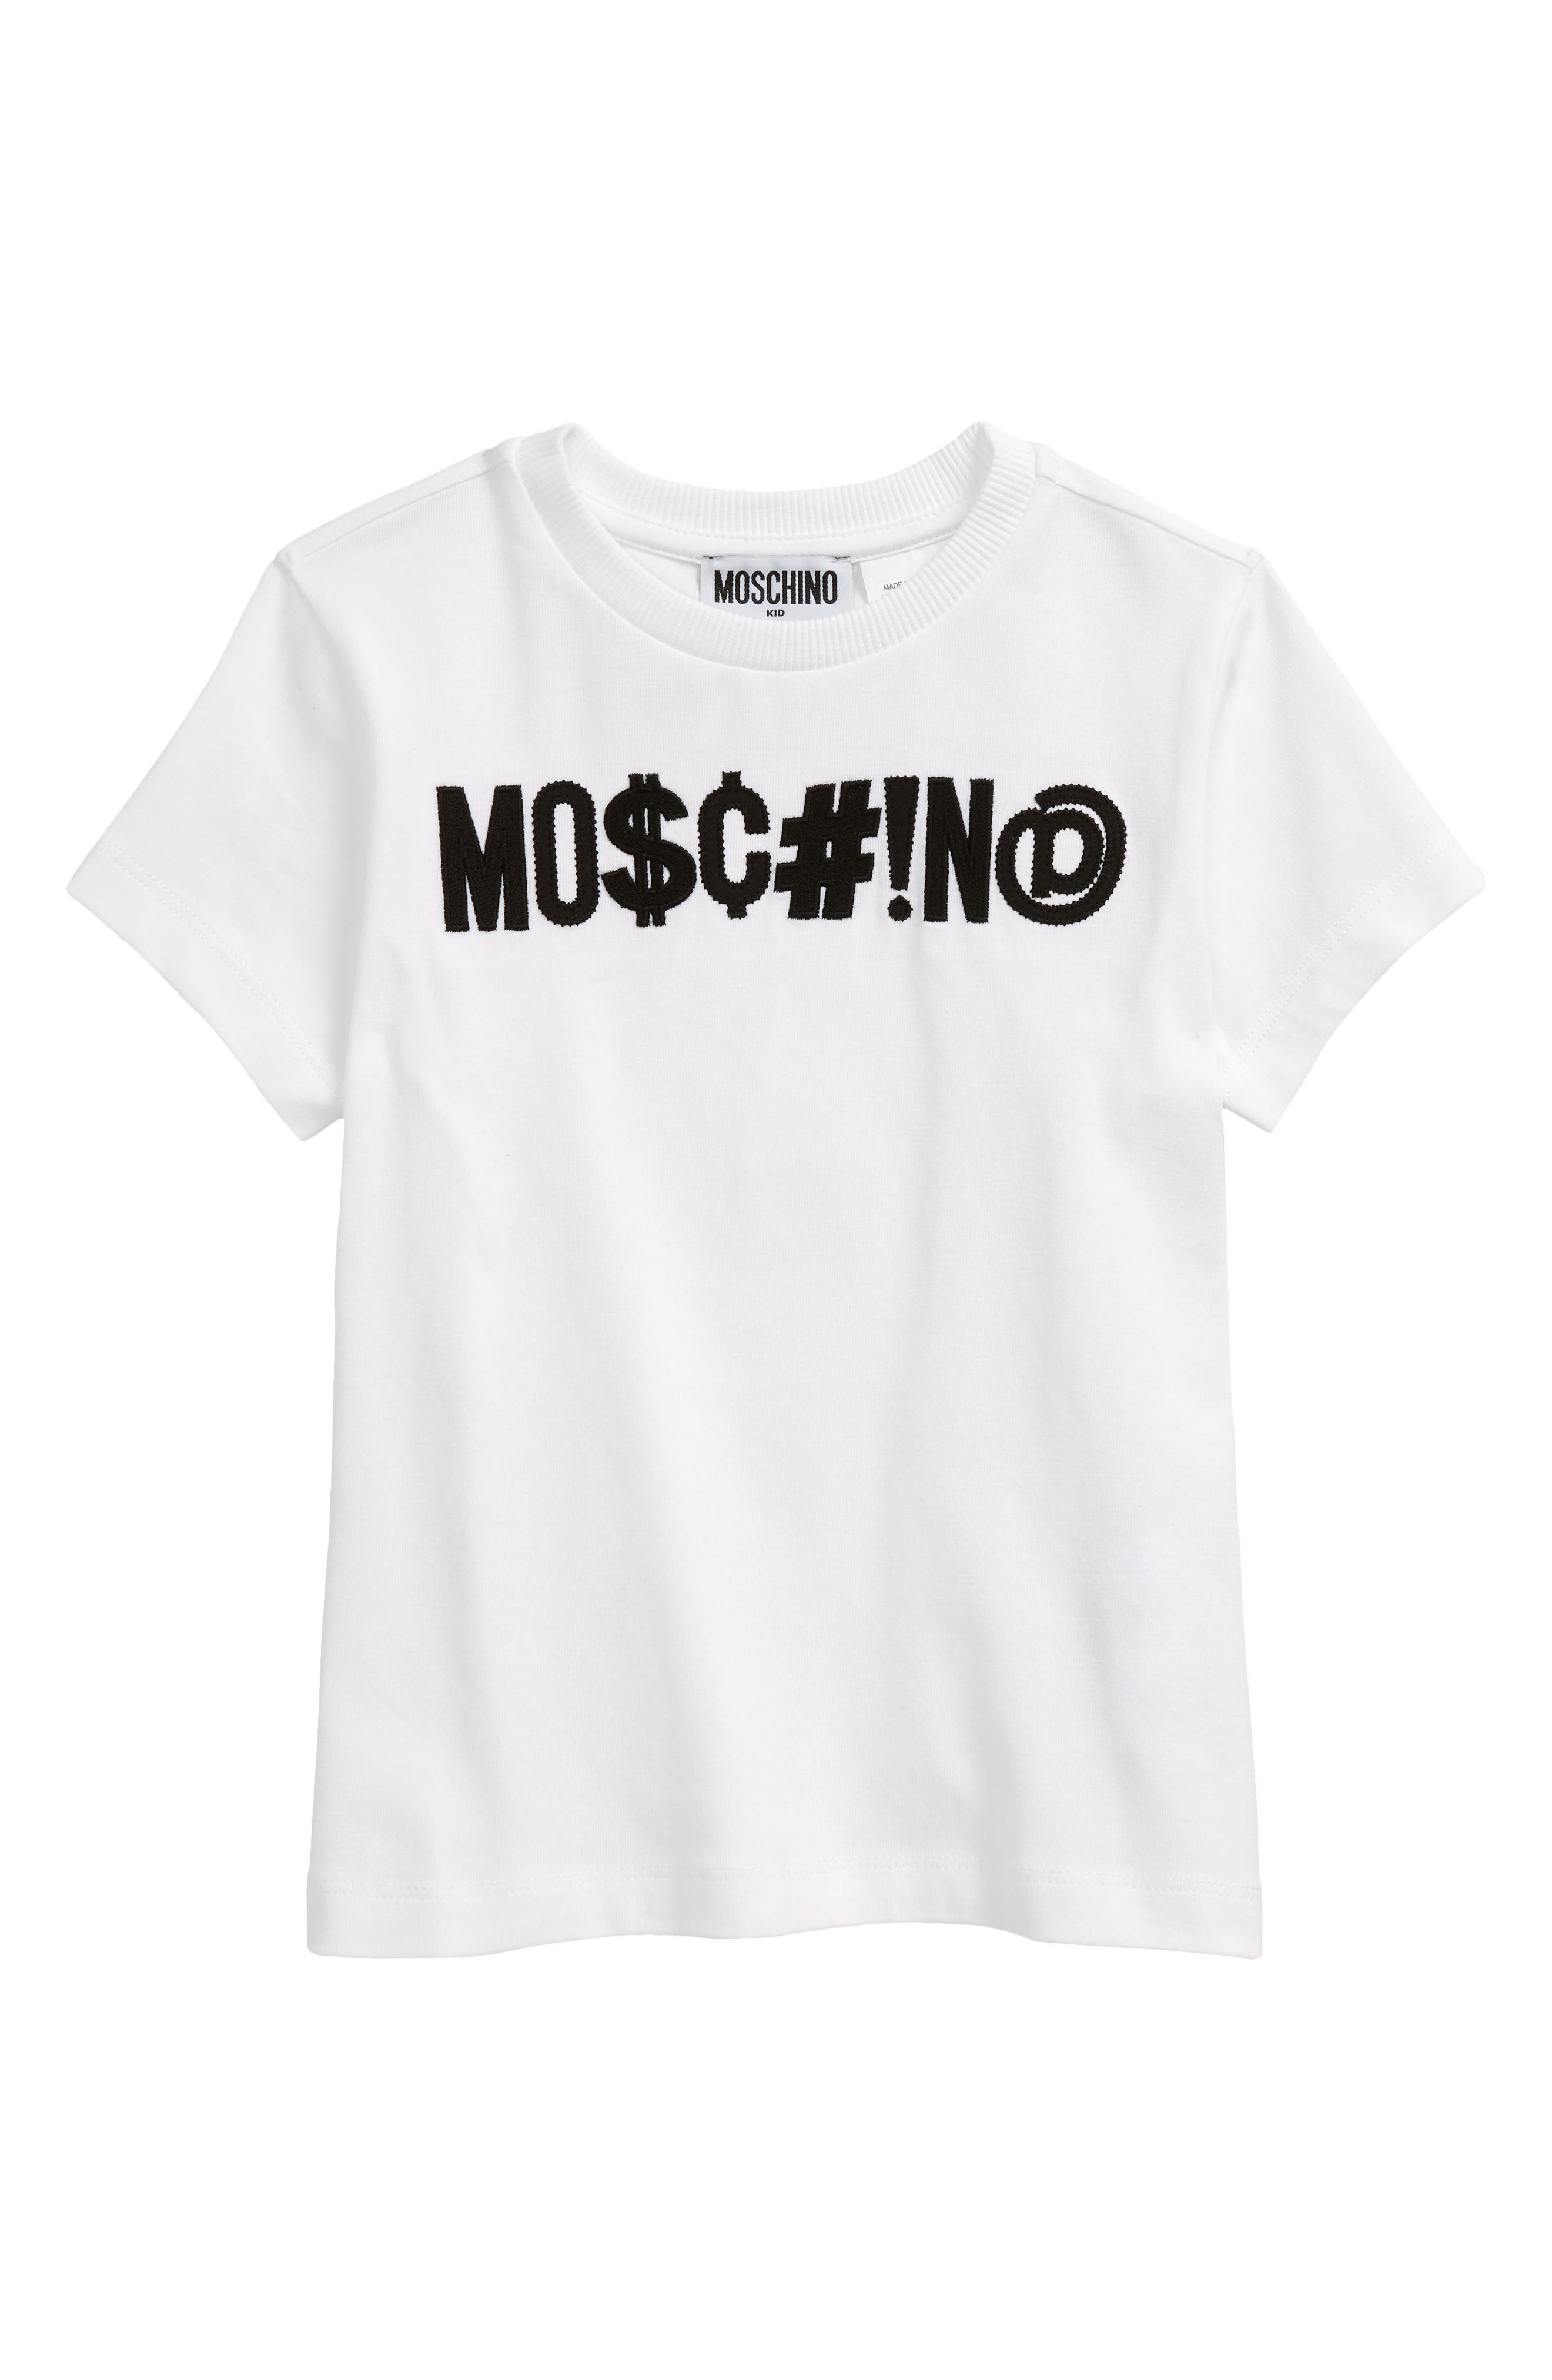 Moschino moschino boys jigsaw T-shirt age 10yrs 